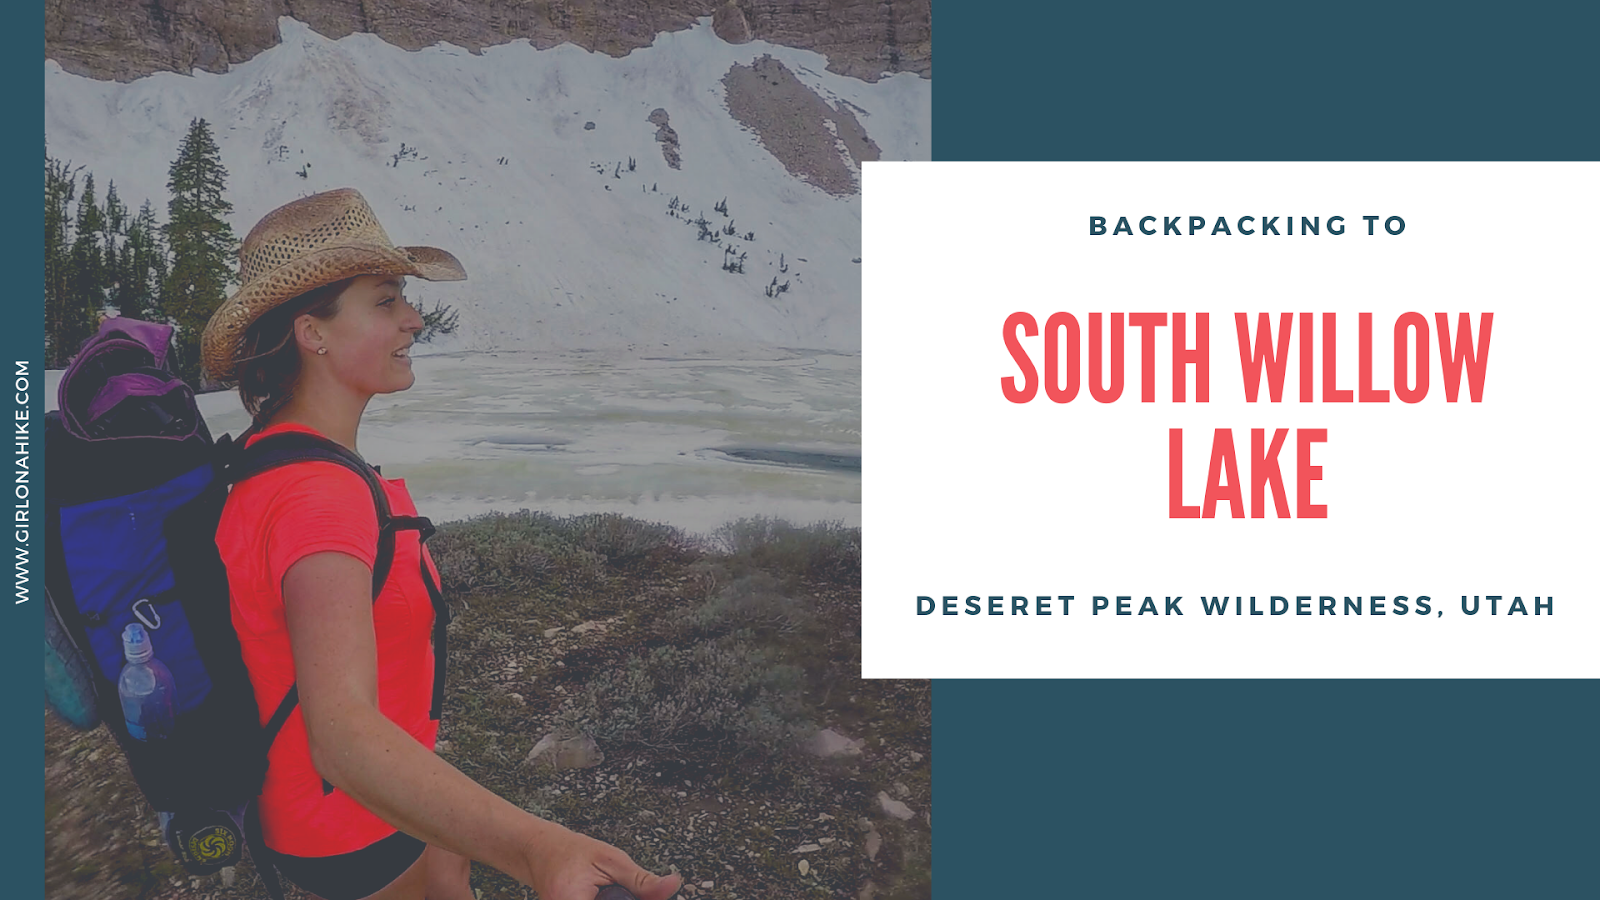 Backpacking to South Willow Lake, Desert Peak Wilderness